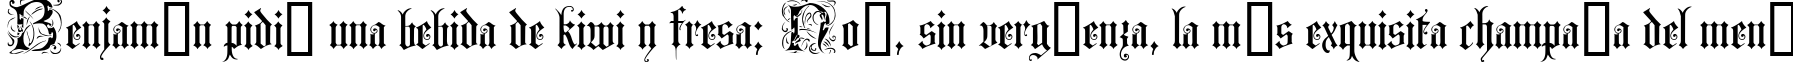 Пример написания шрифтом Lombardina Initial One текста на испанском